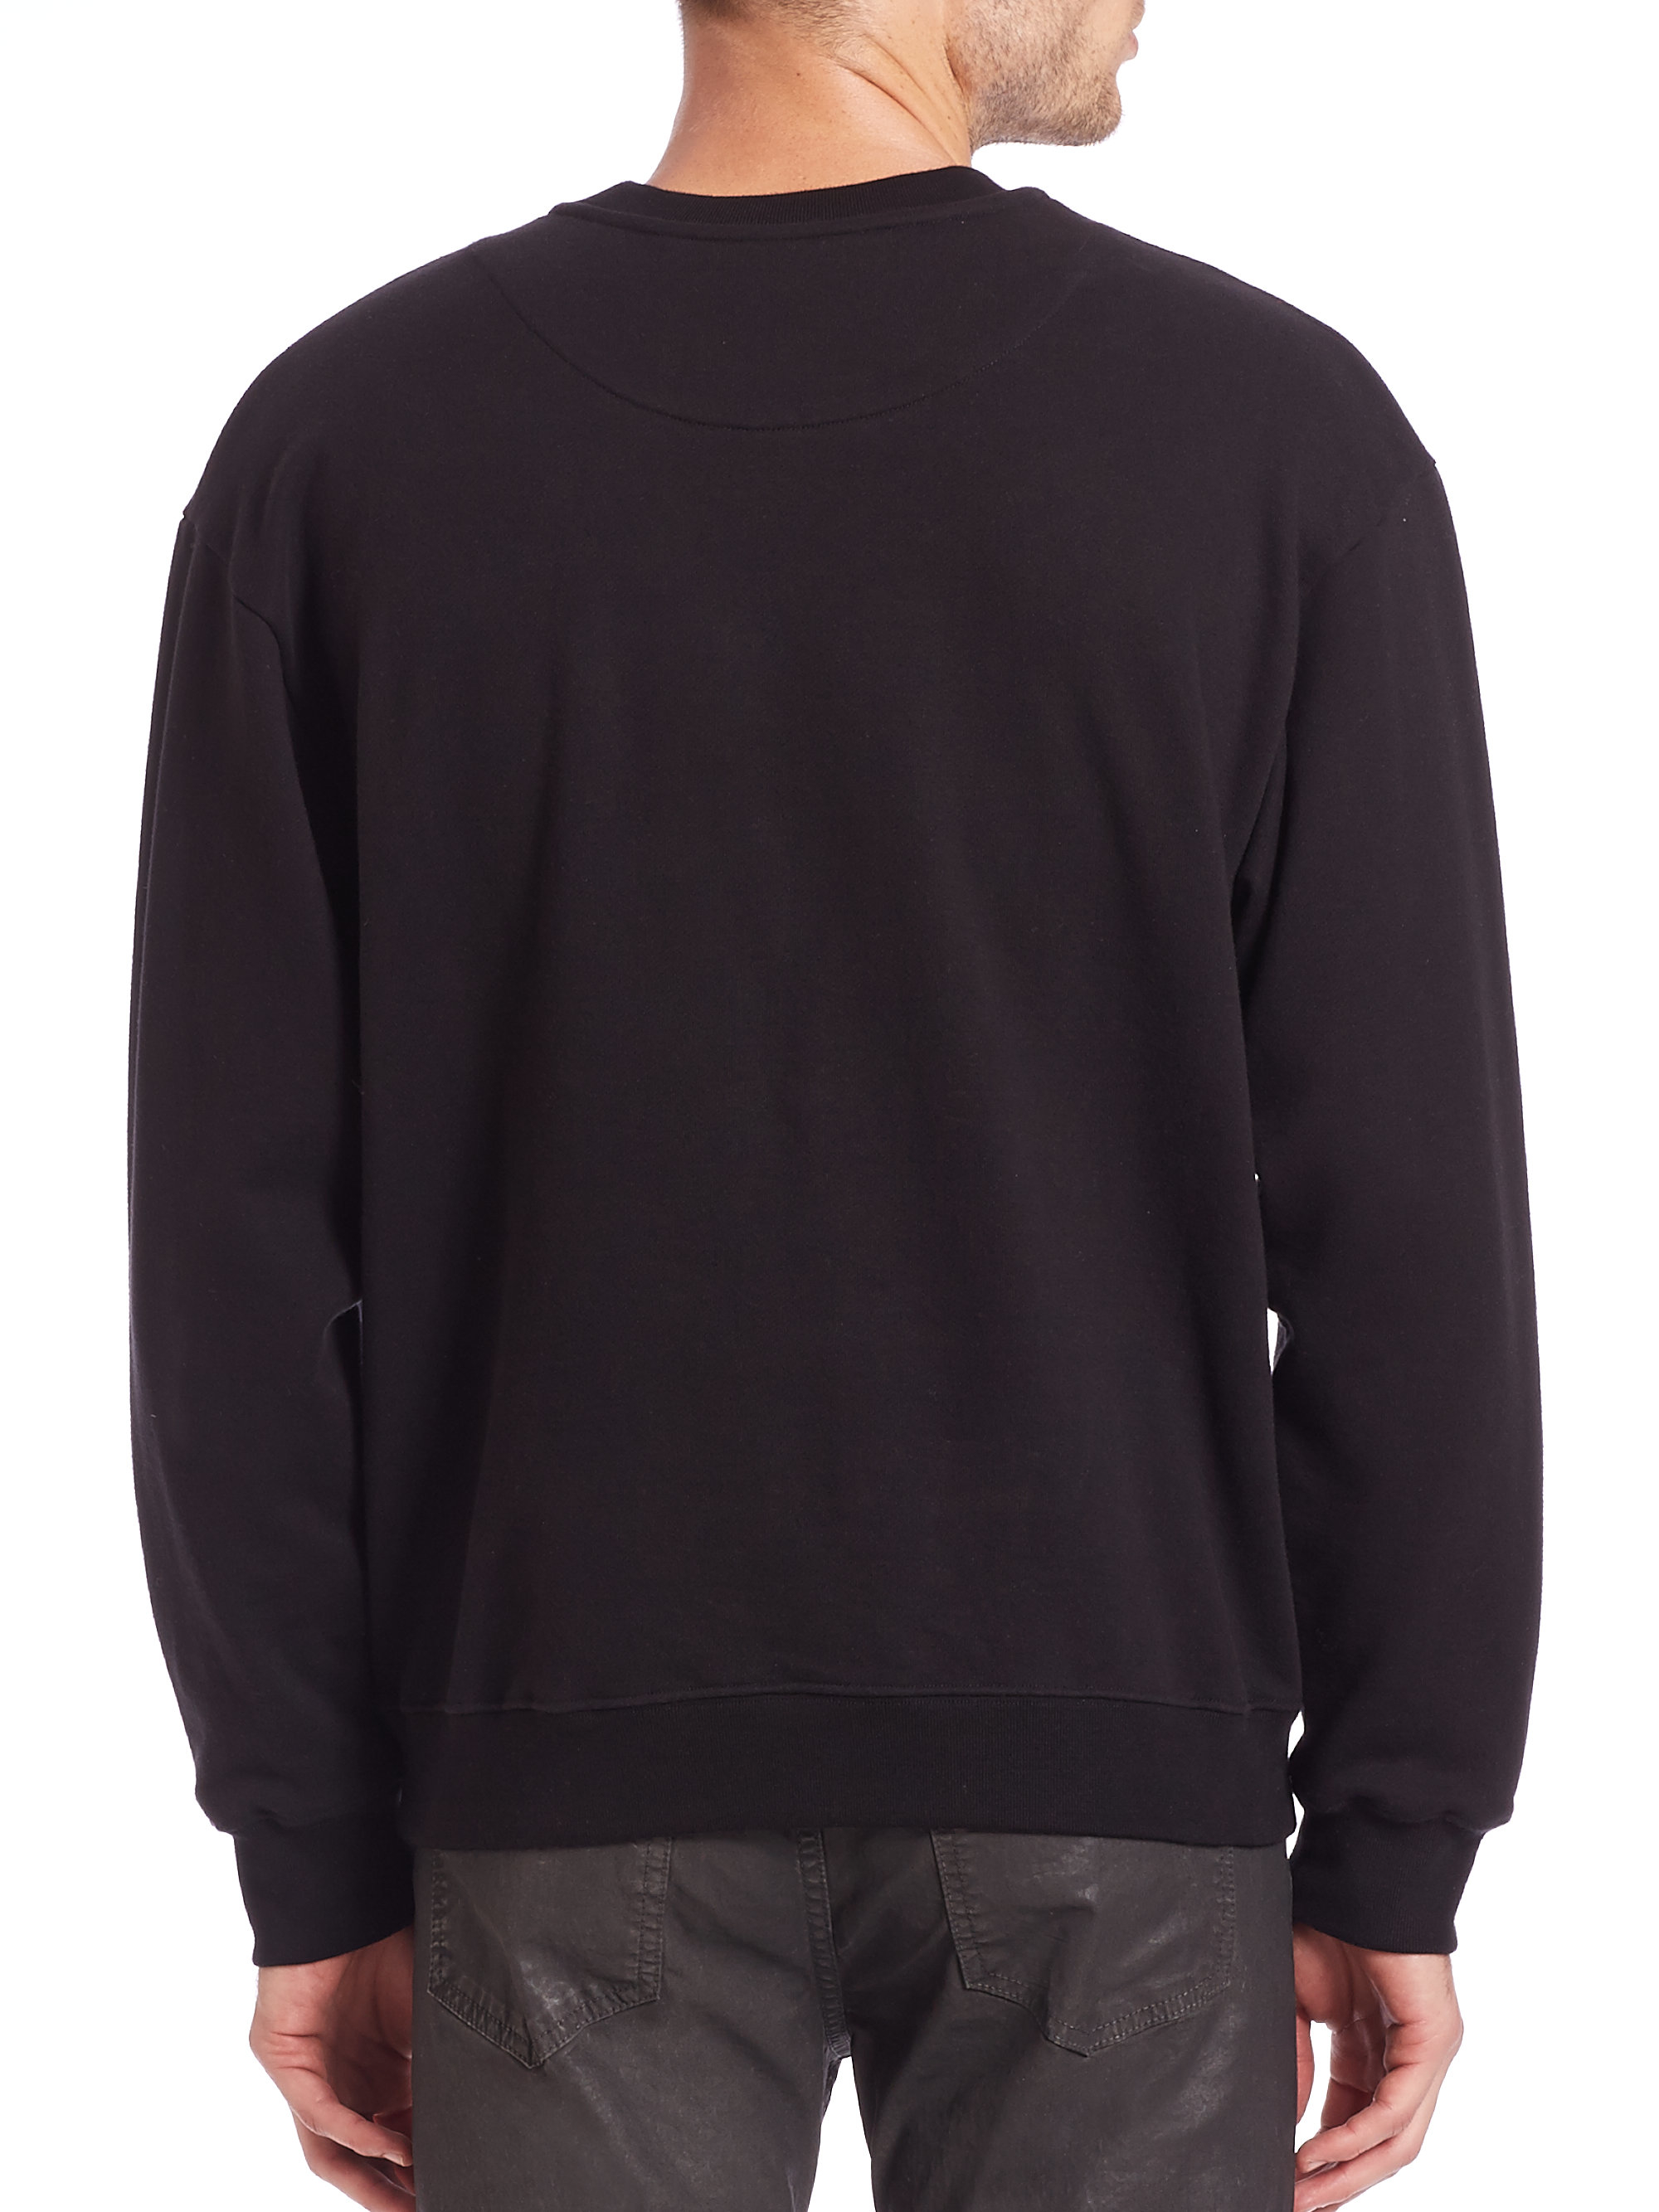 Lyst - Mcq Oversized Graphic Sweatshirt in Black for Men